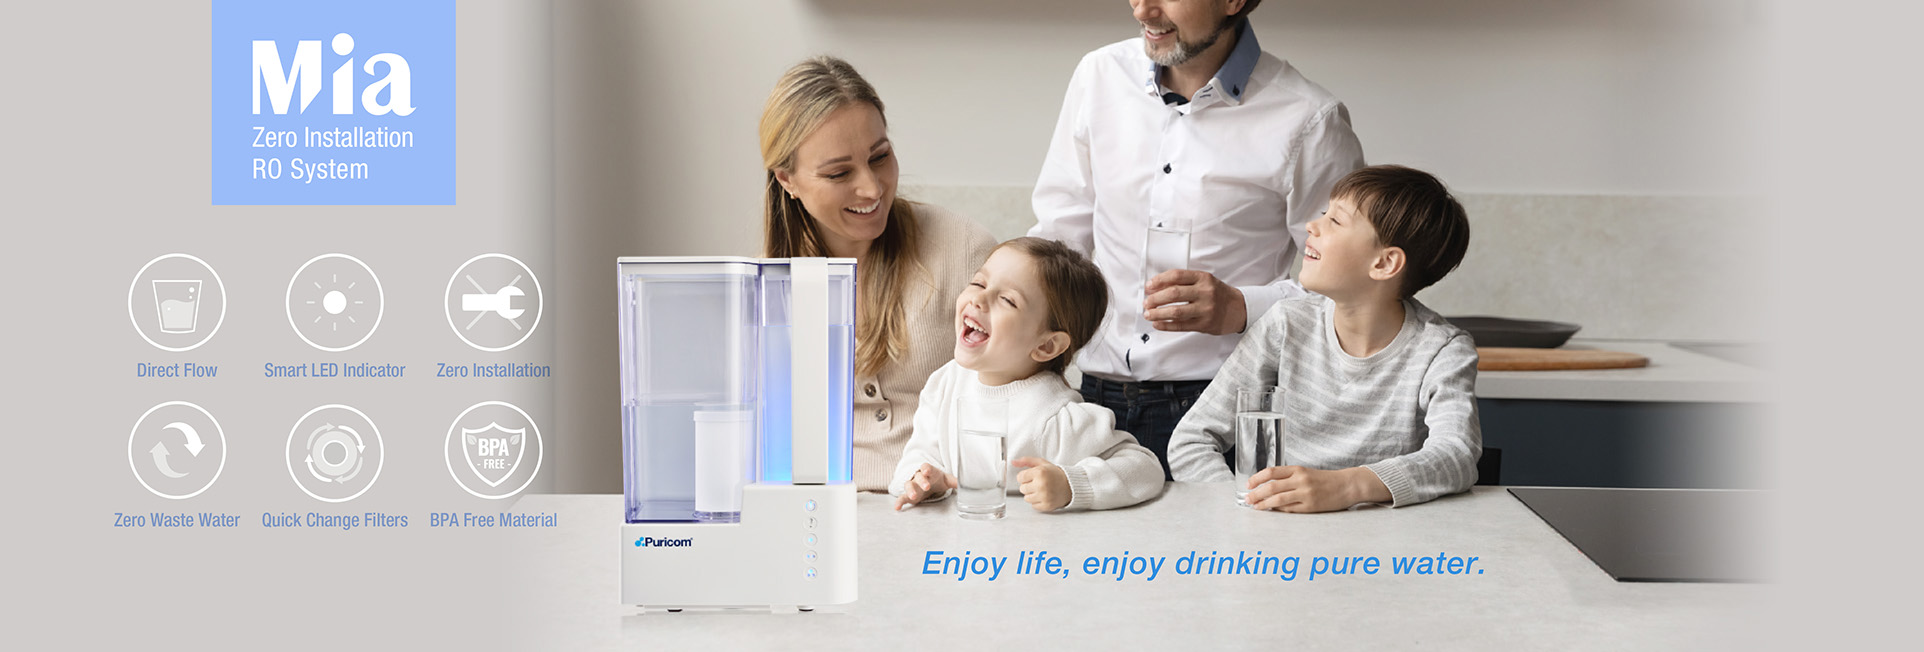 Mia Countertop Water Purifier Dispenser - Enjoy Life, Enjoy Drinking Pure Water